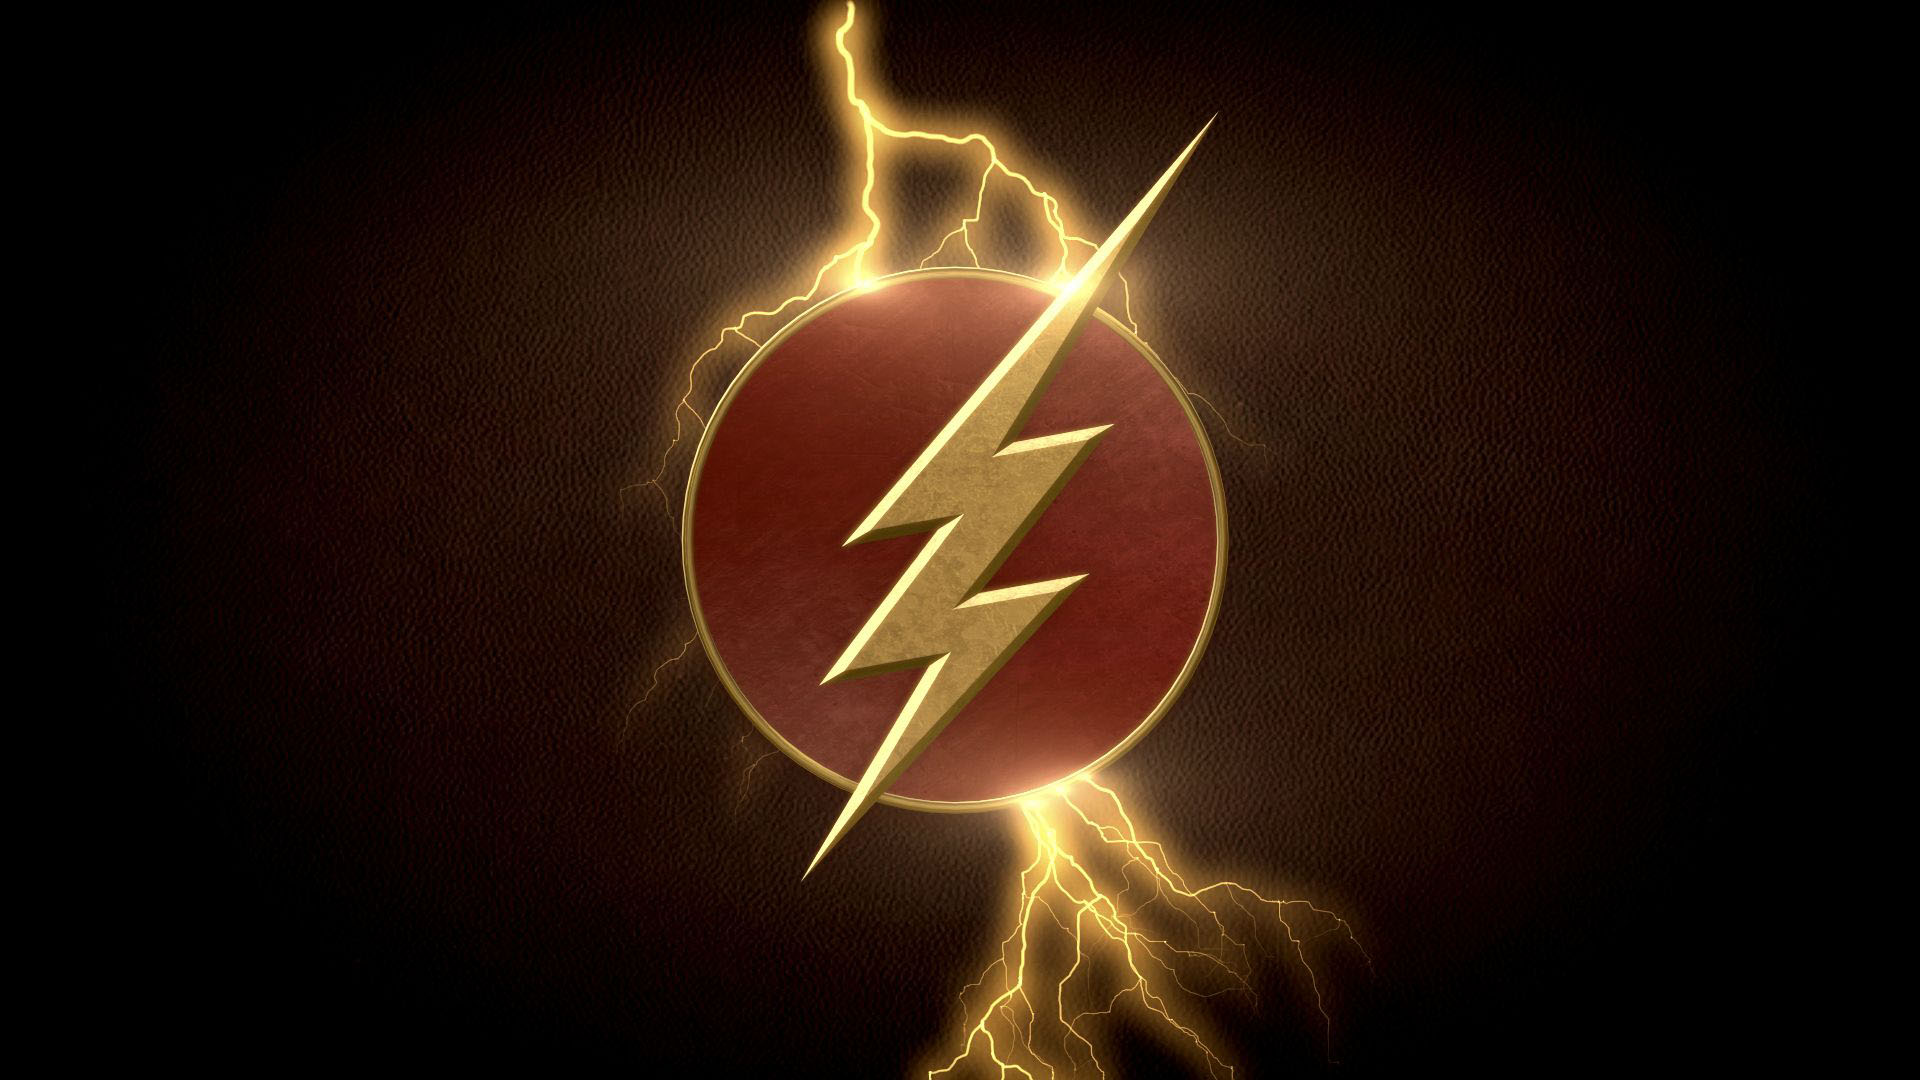 The Flash Logo HD Wallpaper